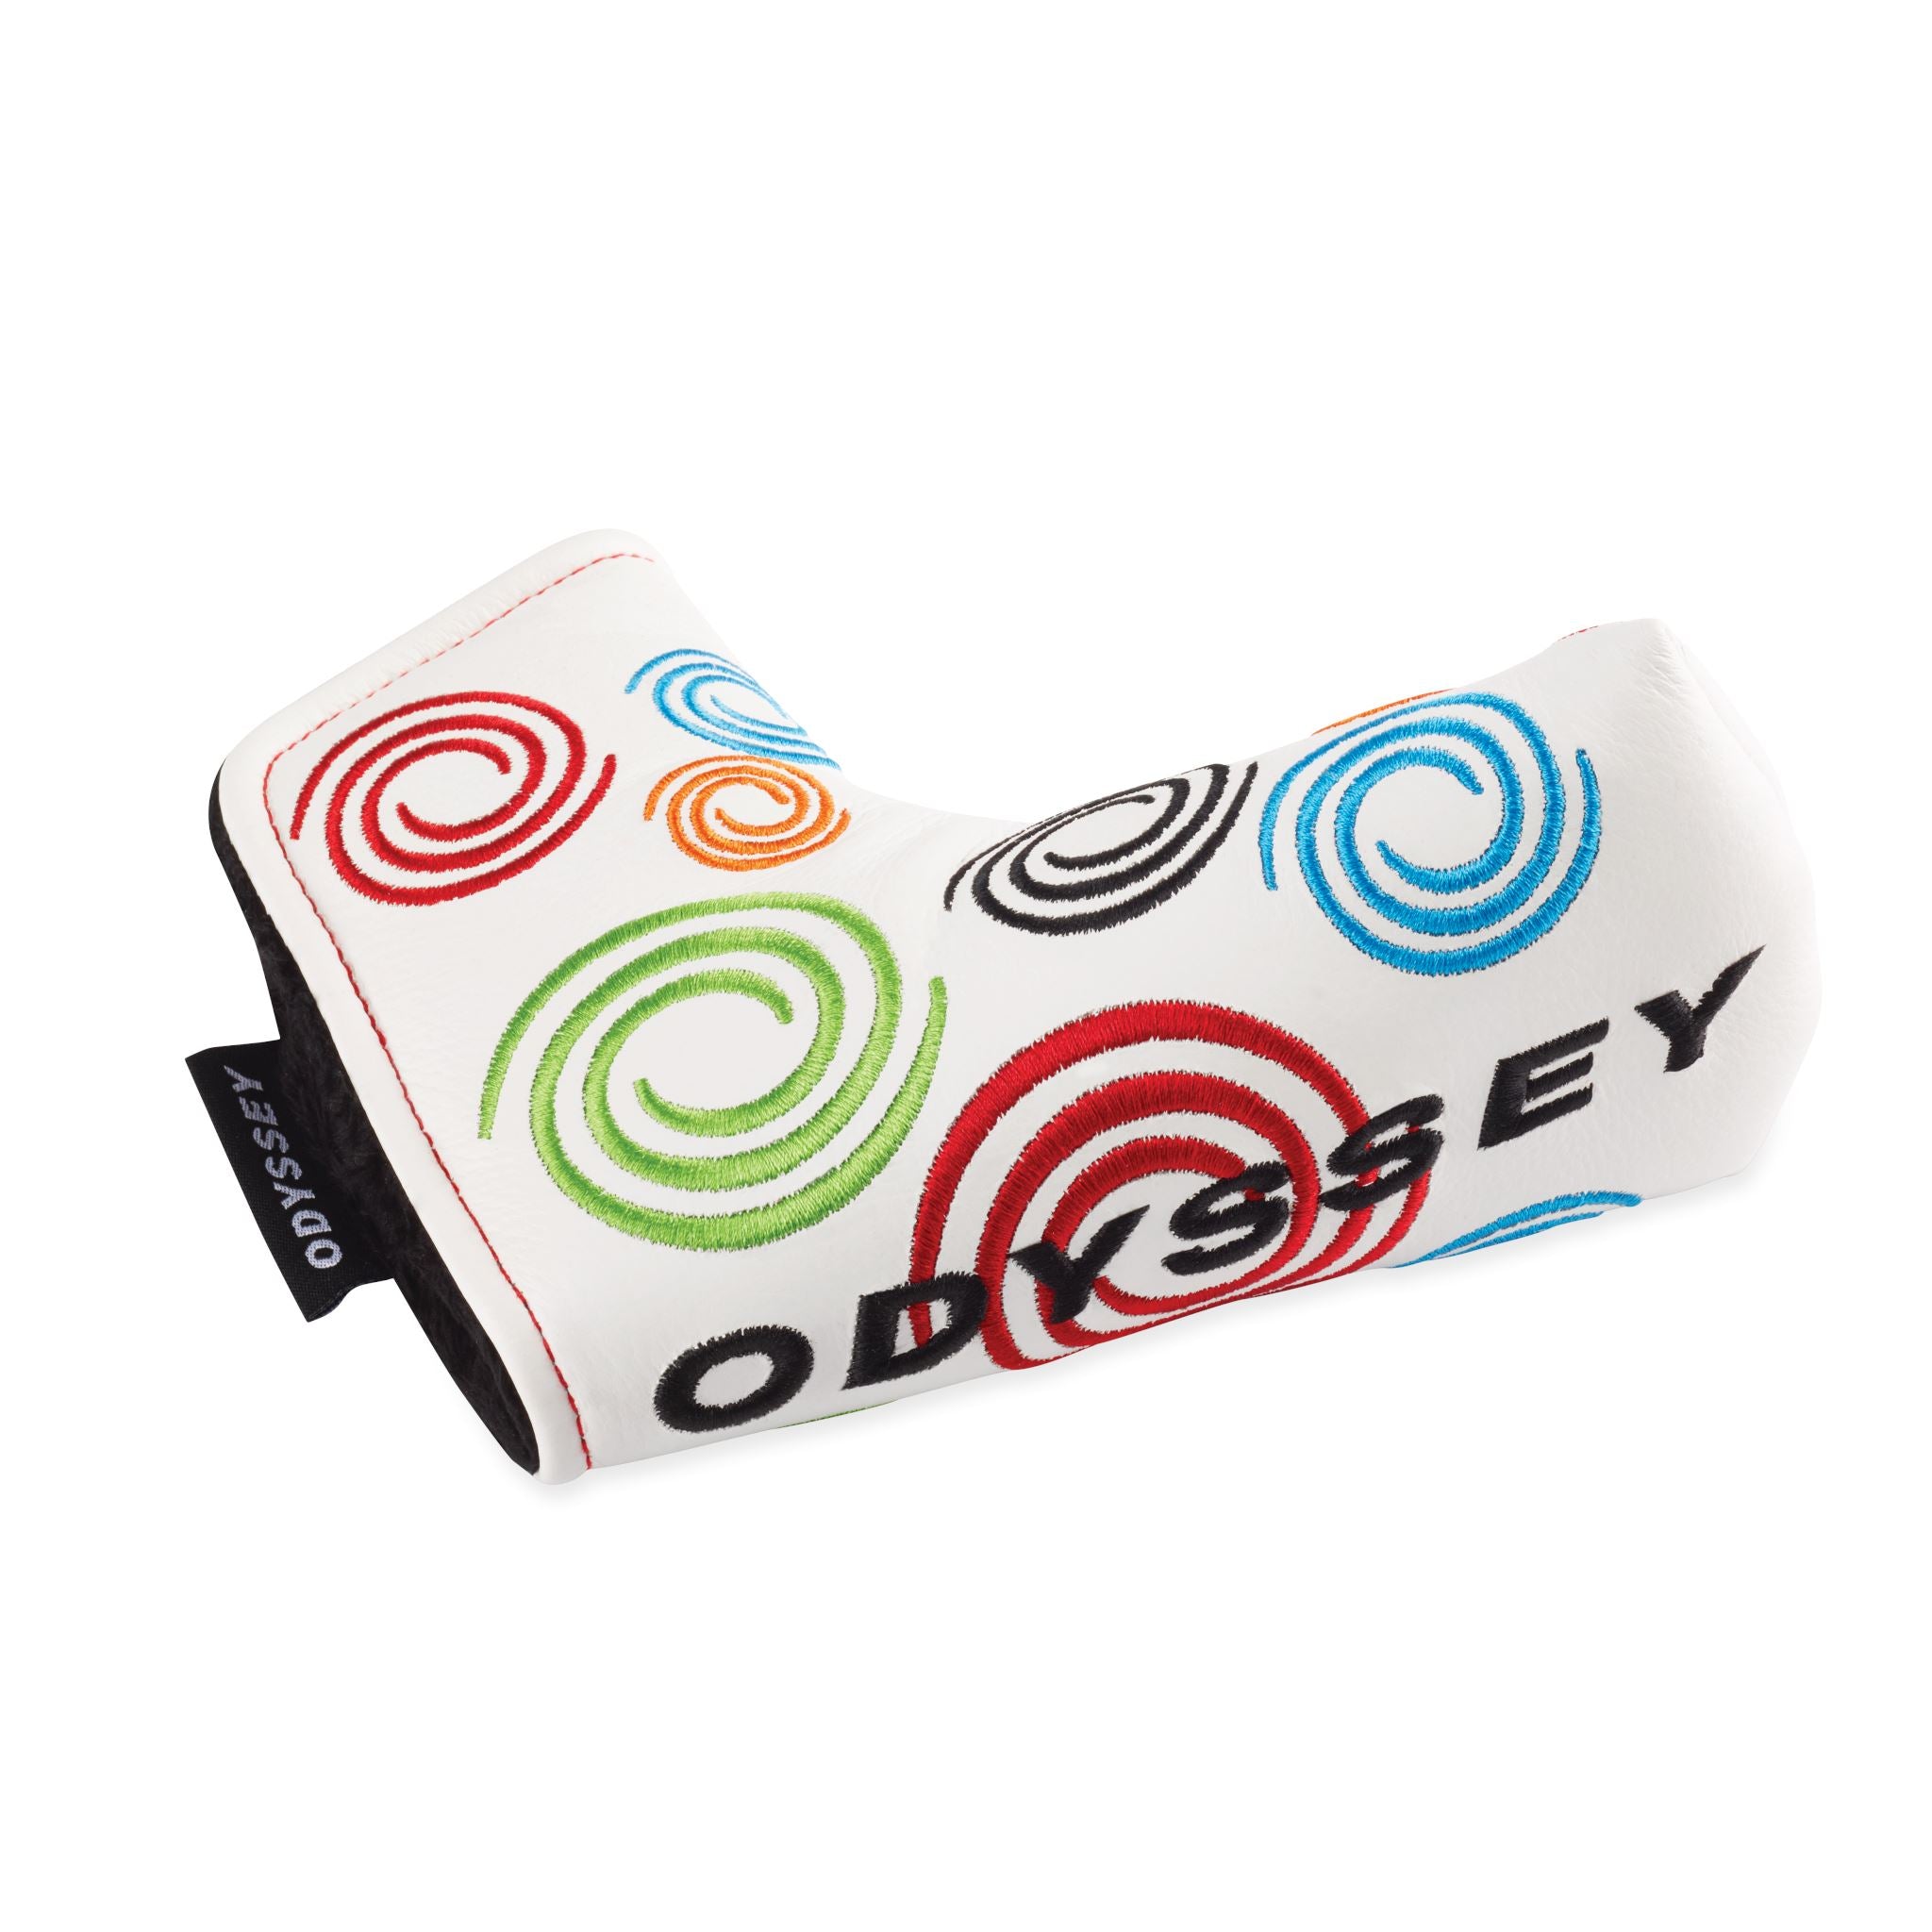 Odyssey Swirl White Blade Putter Headcover CUBIERTAS PUTTER ODYSSEY Galaxy Golf